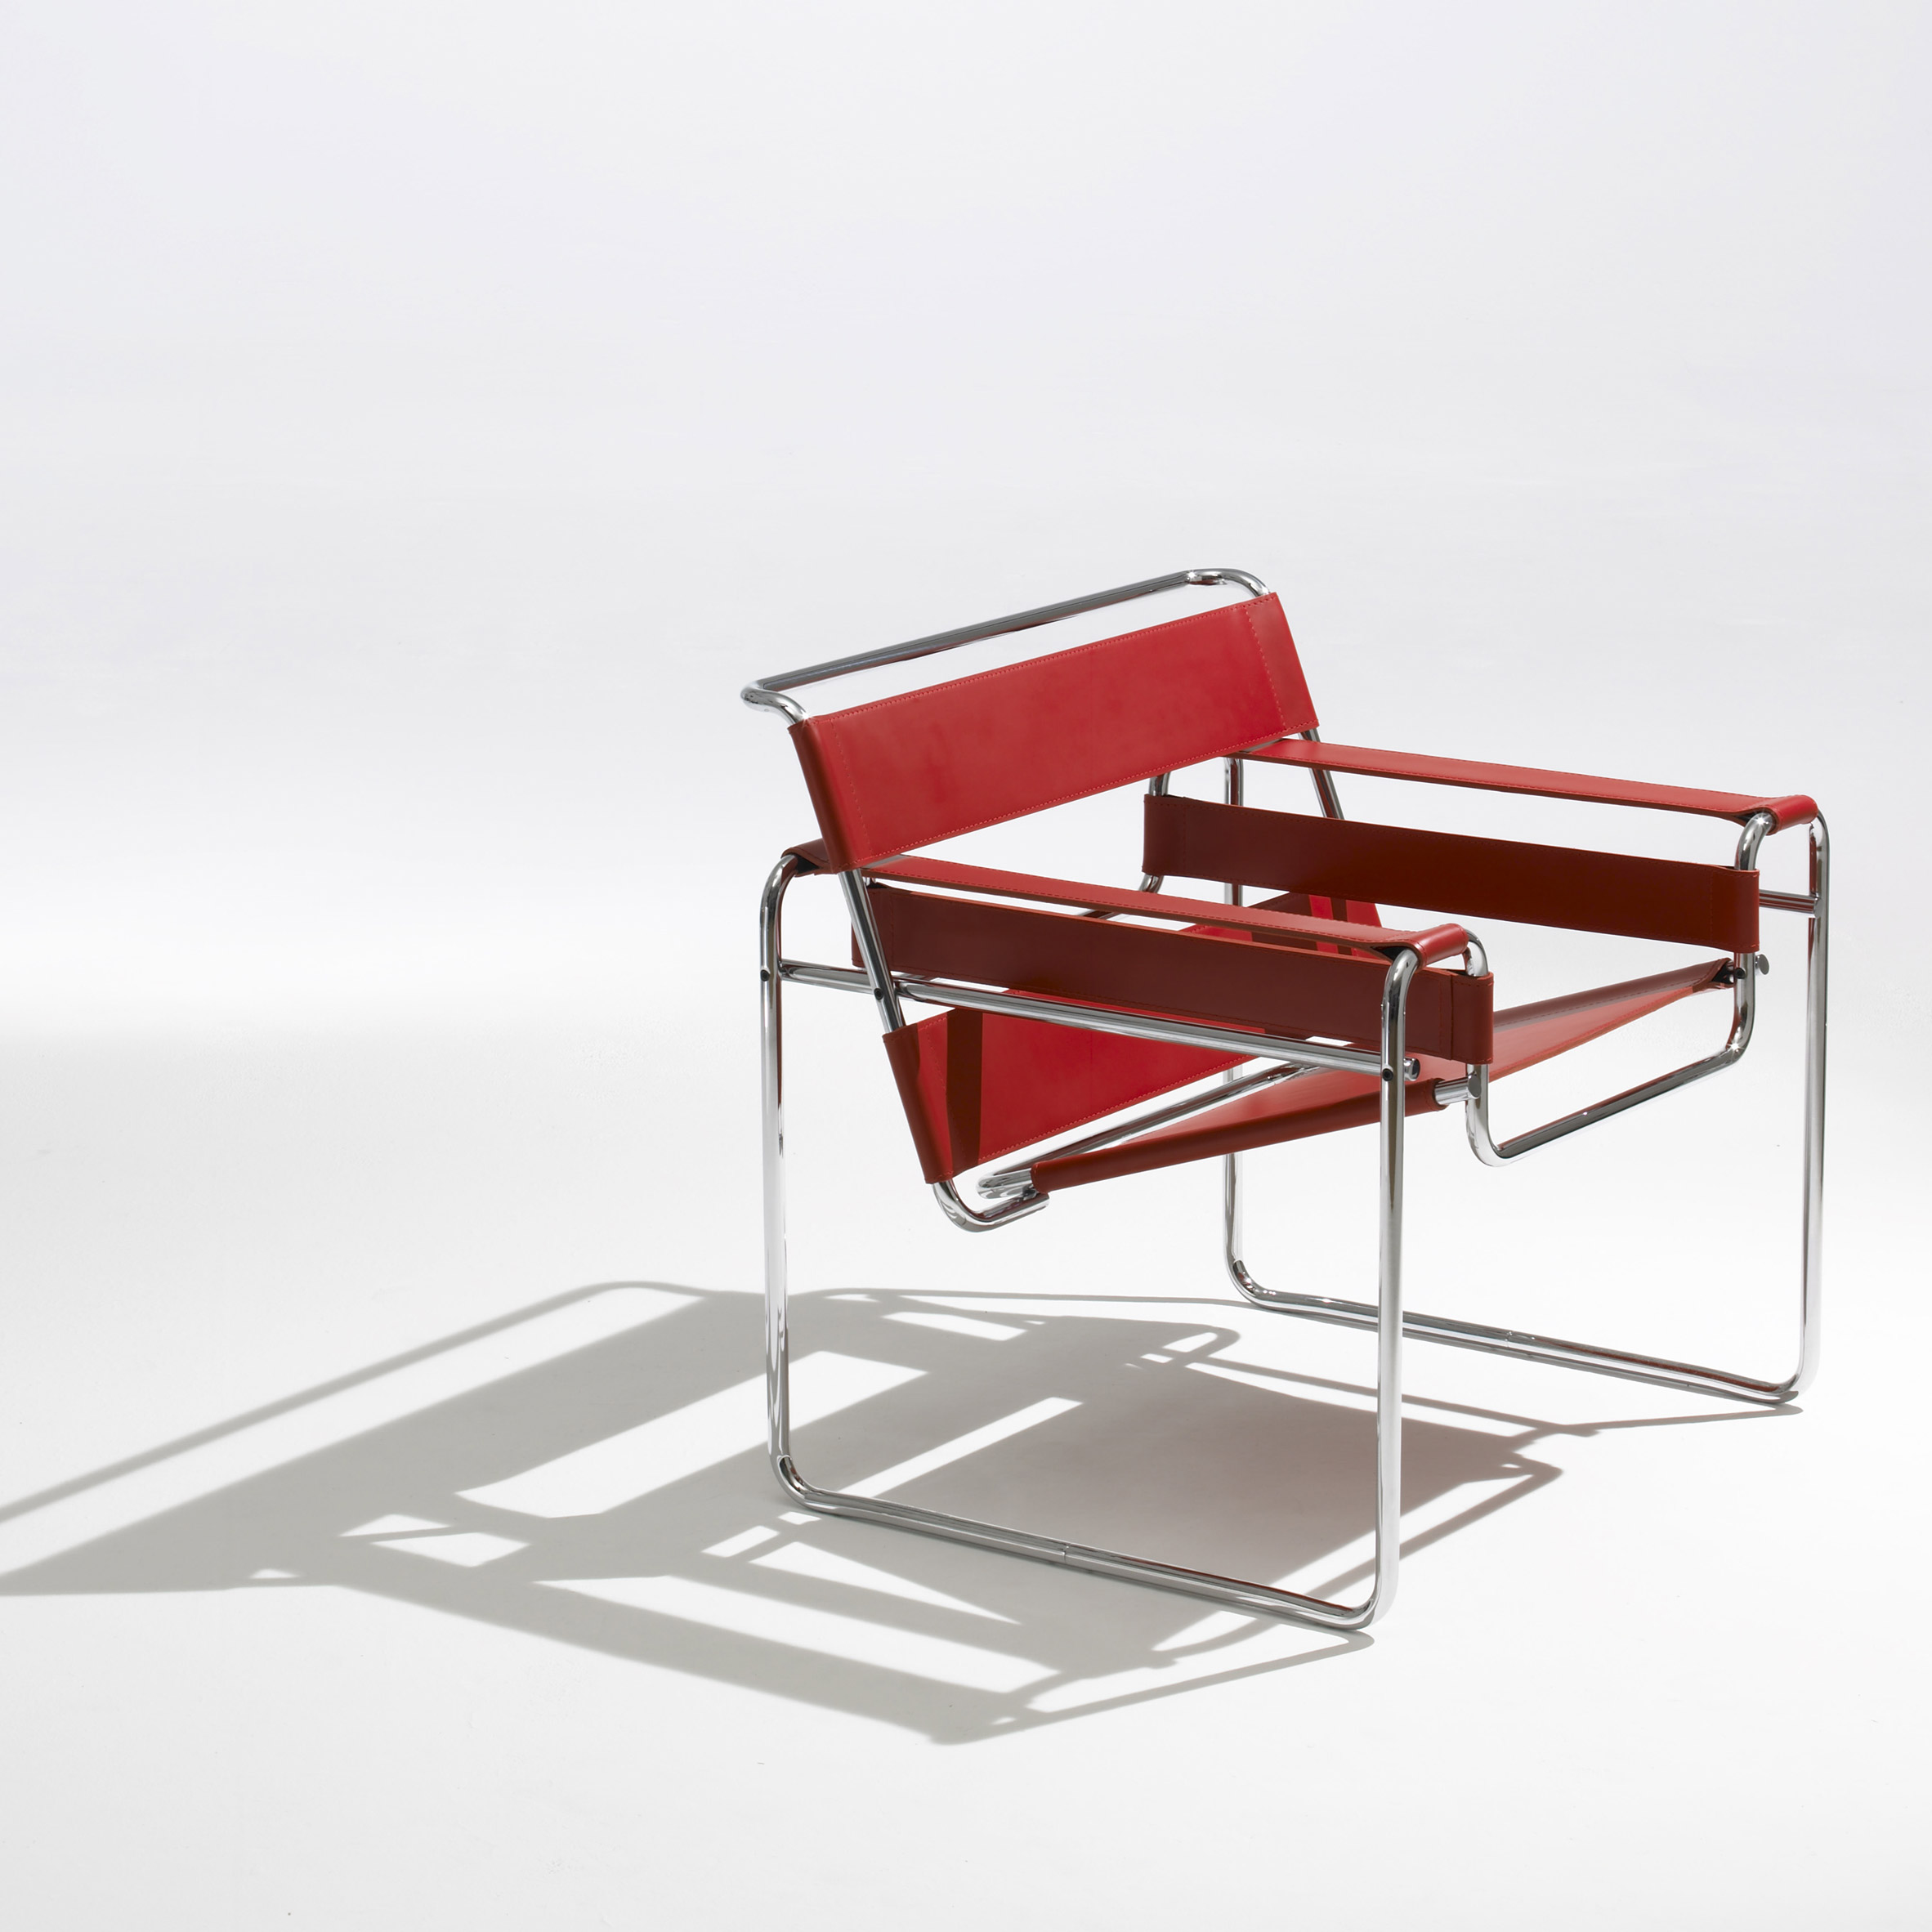 Bauhaus Furniture Design History - Homecare24